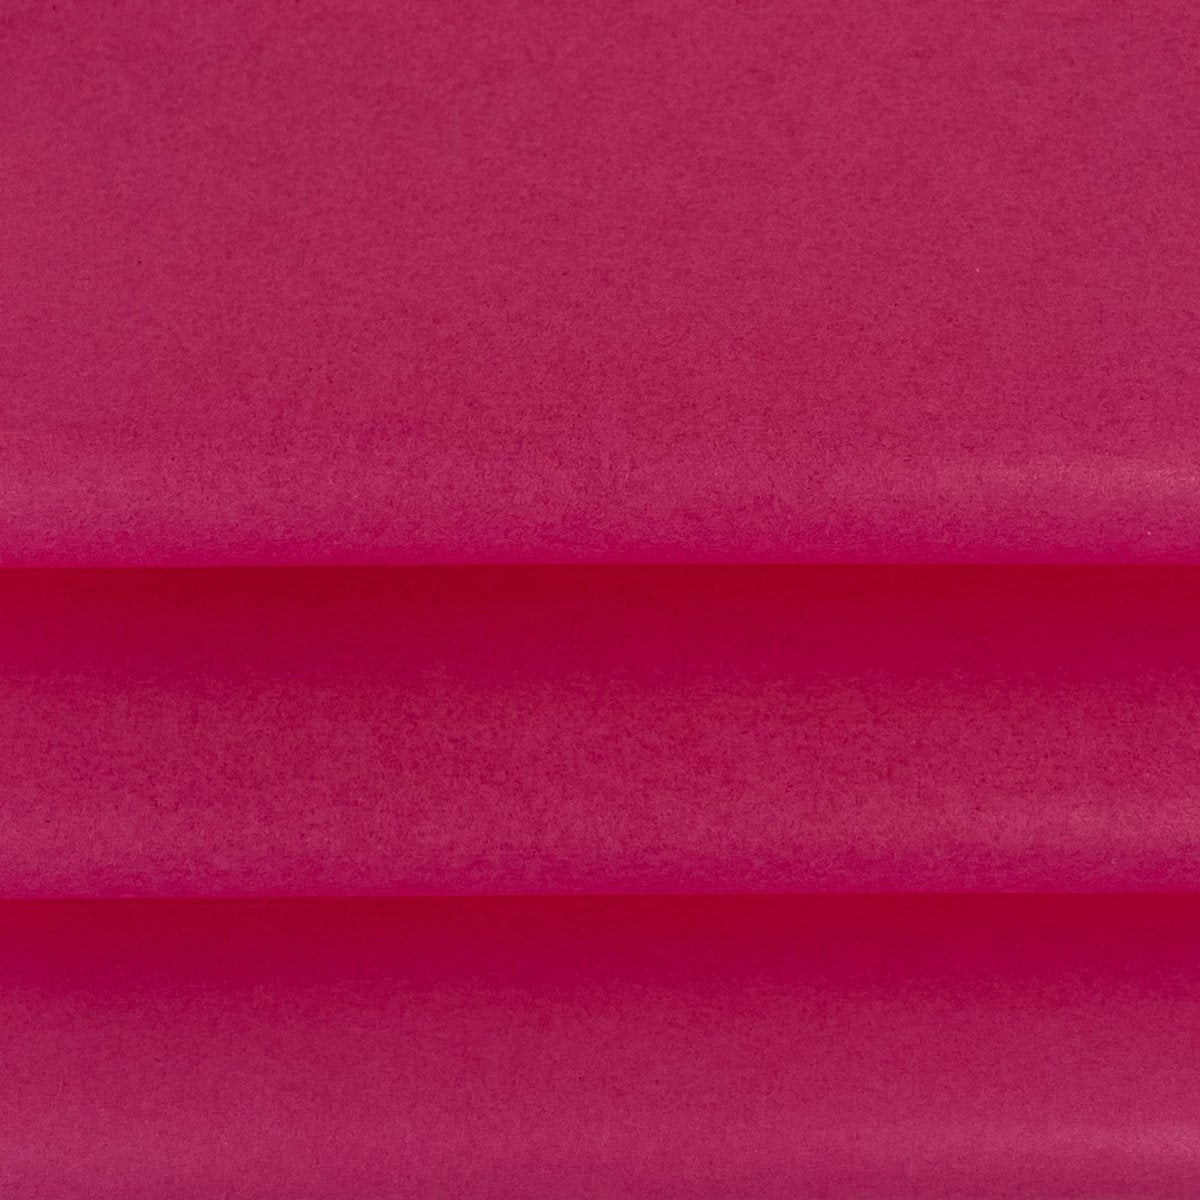 Vloeipapier kleur Roze